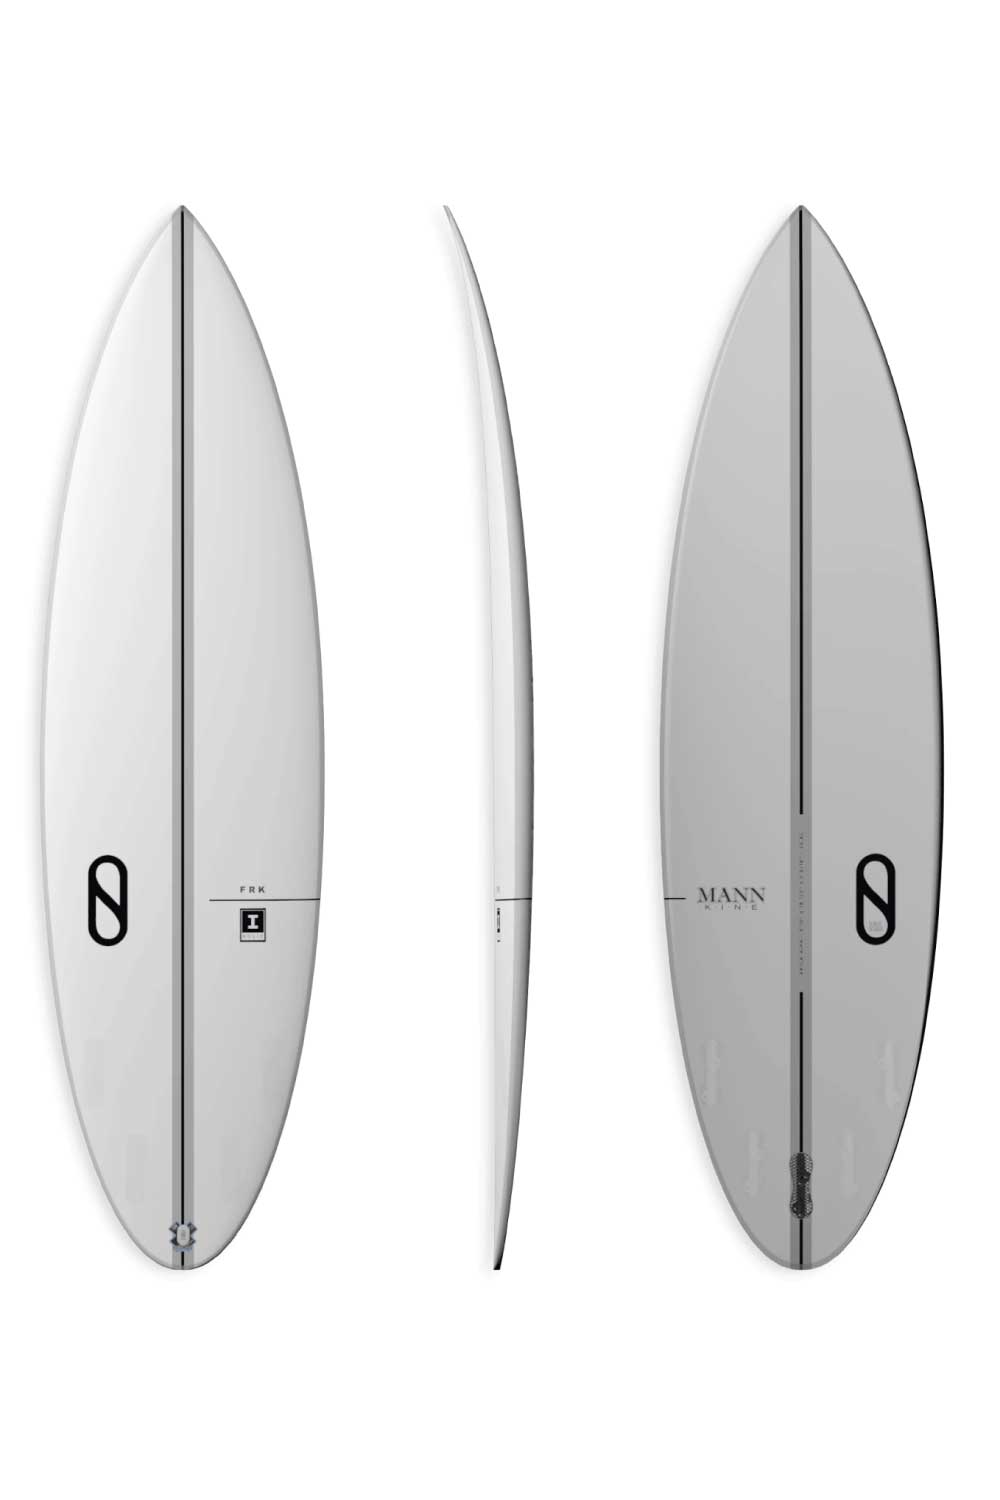 Slater Designs FRK IBOLIC Surfboard | Buy Online Sanbah Australia